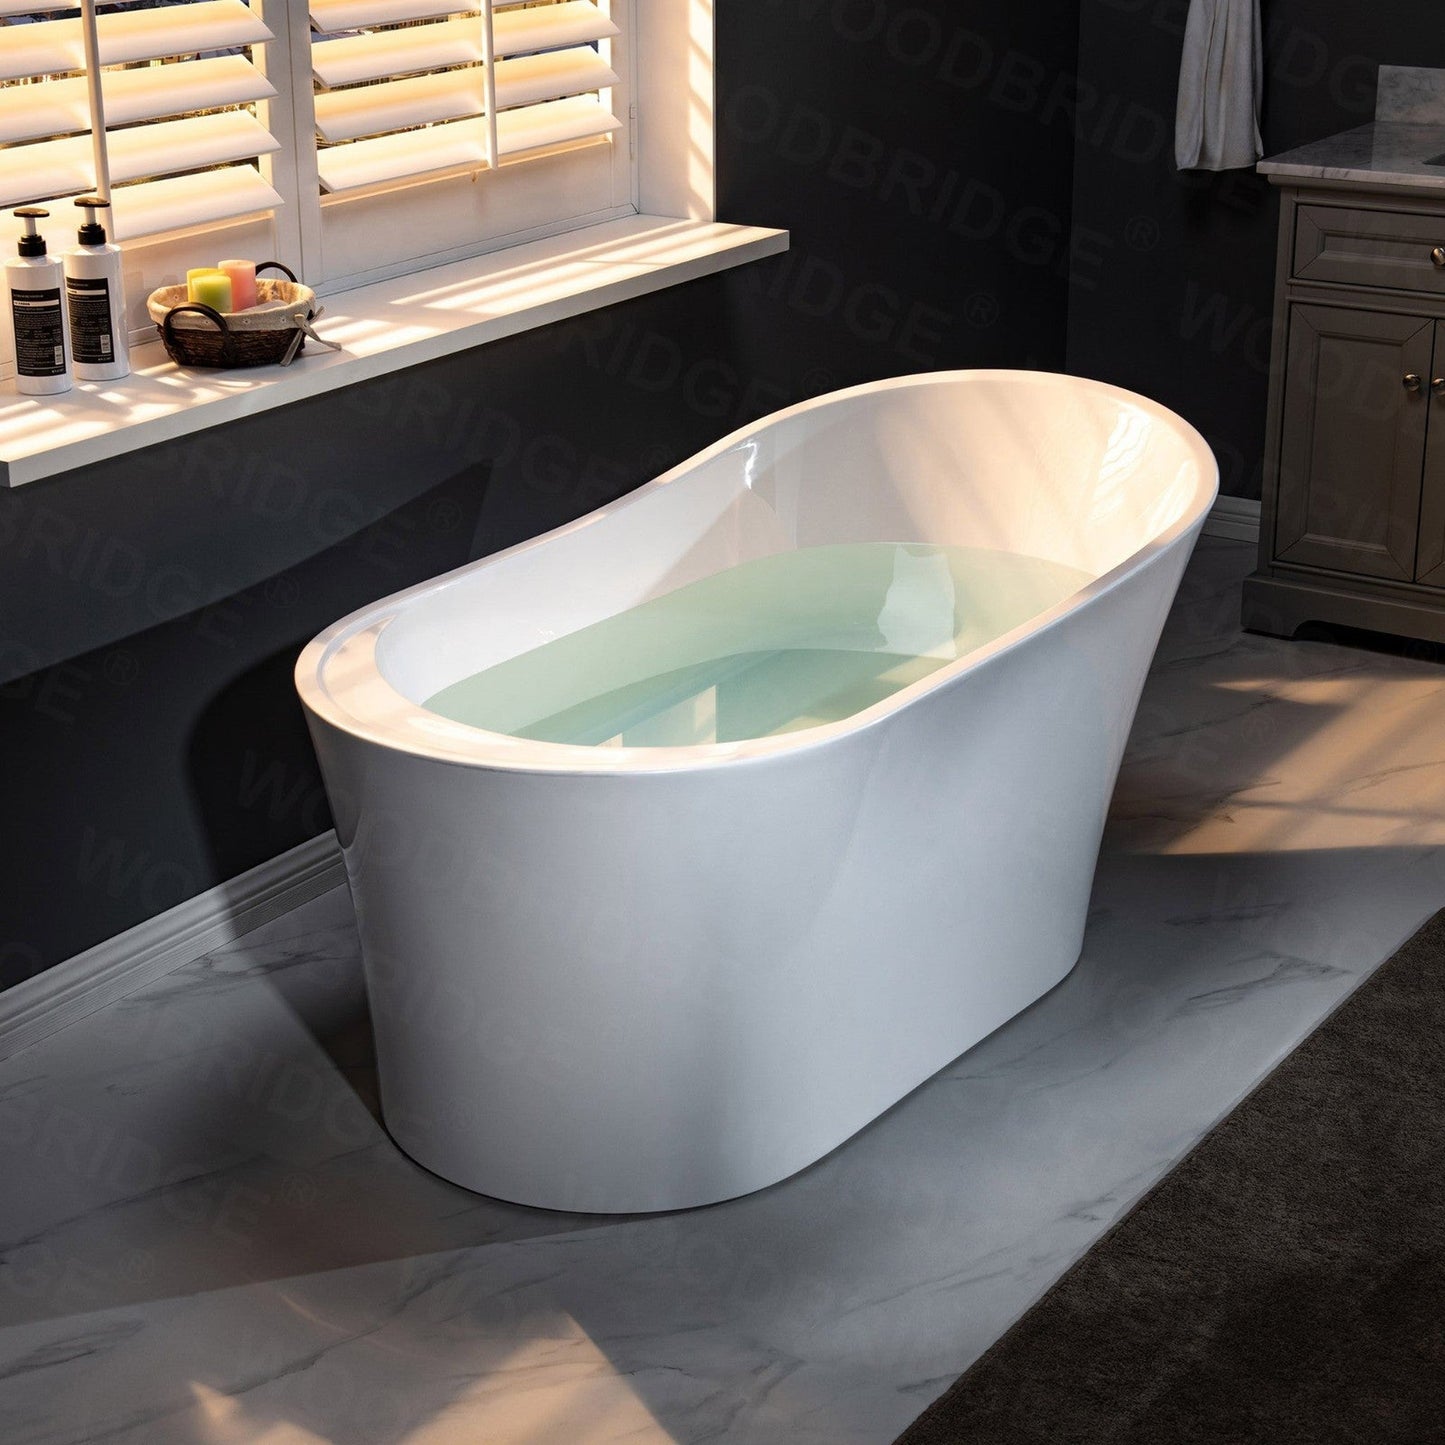 WoodBridge B0084 67" White Acrylic Freestanding Soaking Bathtub With Matte Black Drain, Overflow, F0072MBVT Tub Filler and Caddy Tray